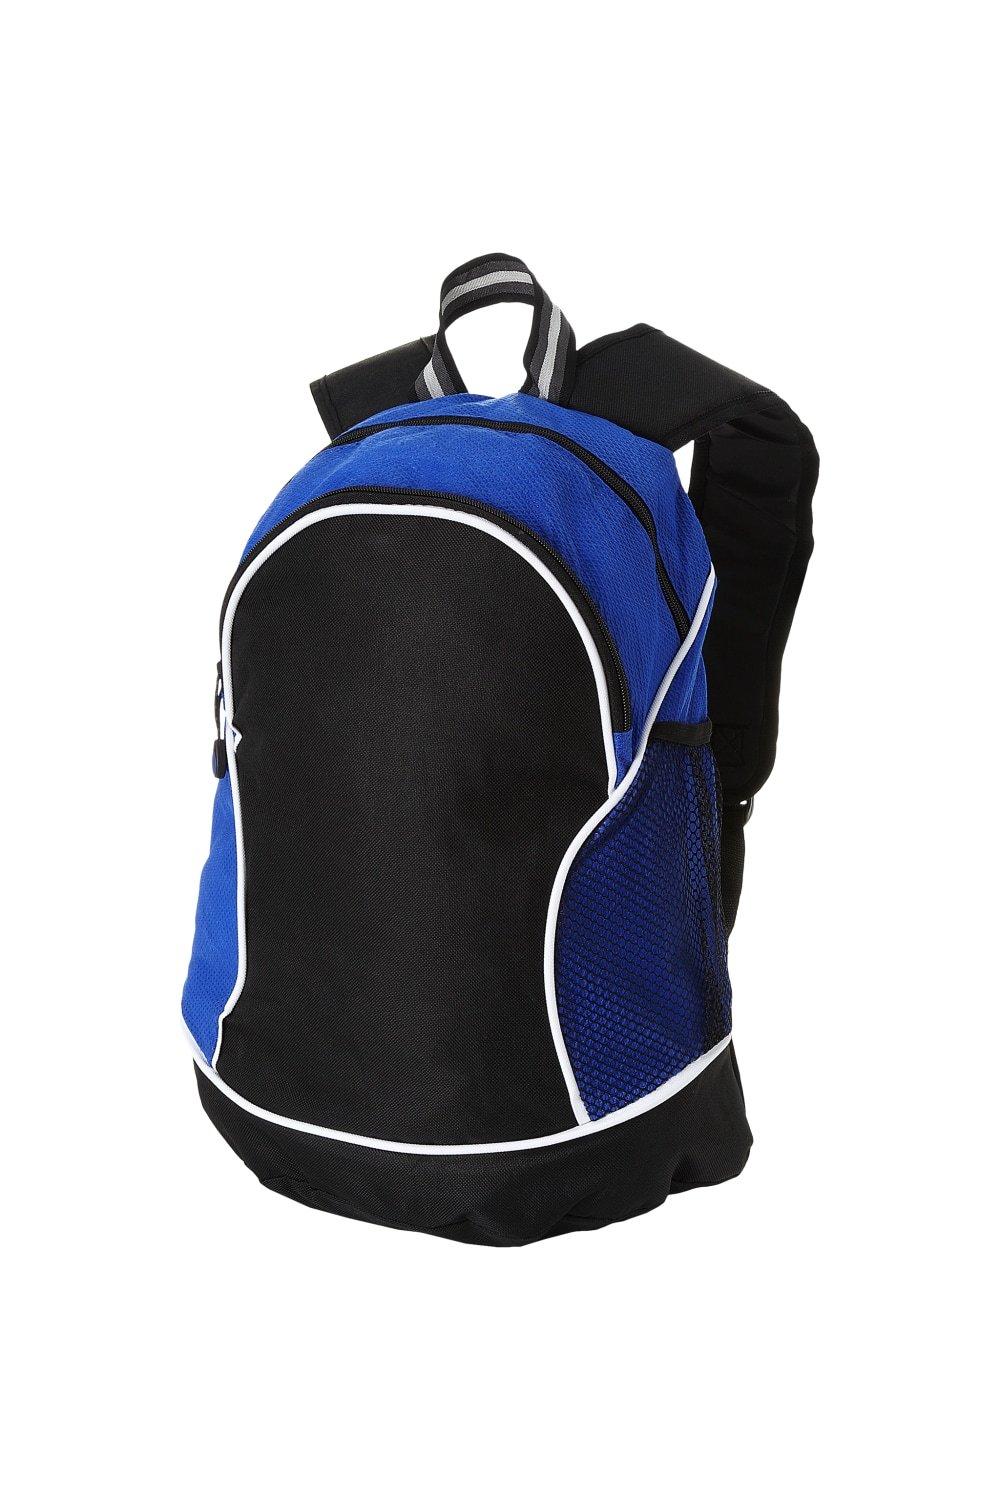  Bullet Boomerang Backpack (29 x 18 x 42 cm) (Solid Black/Royal Blue)